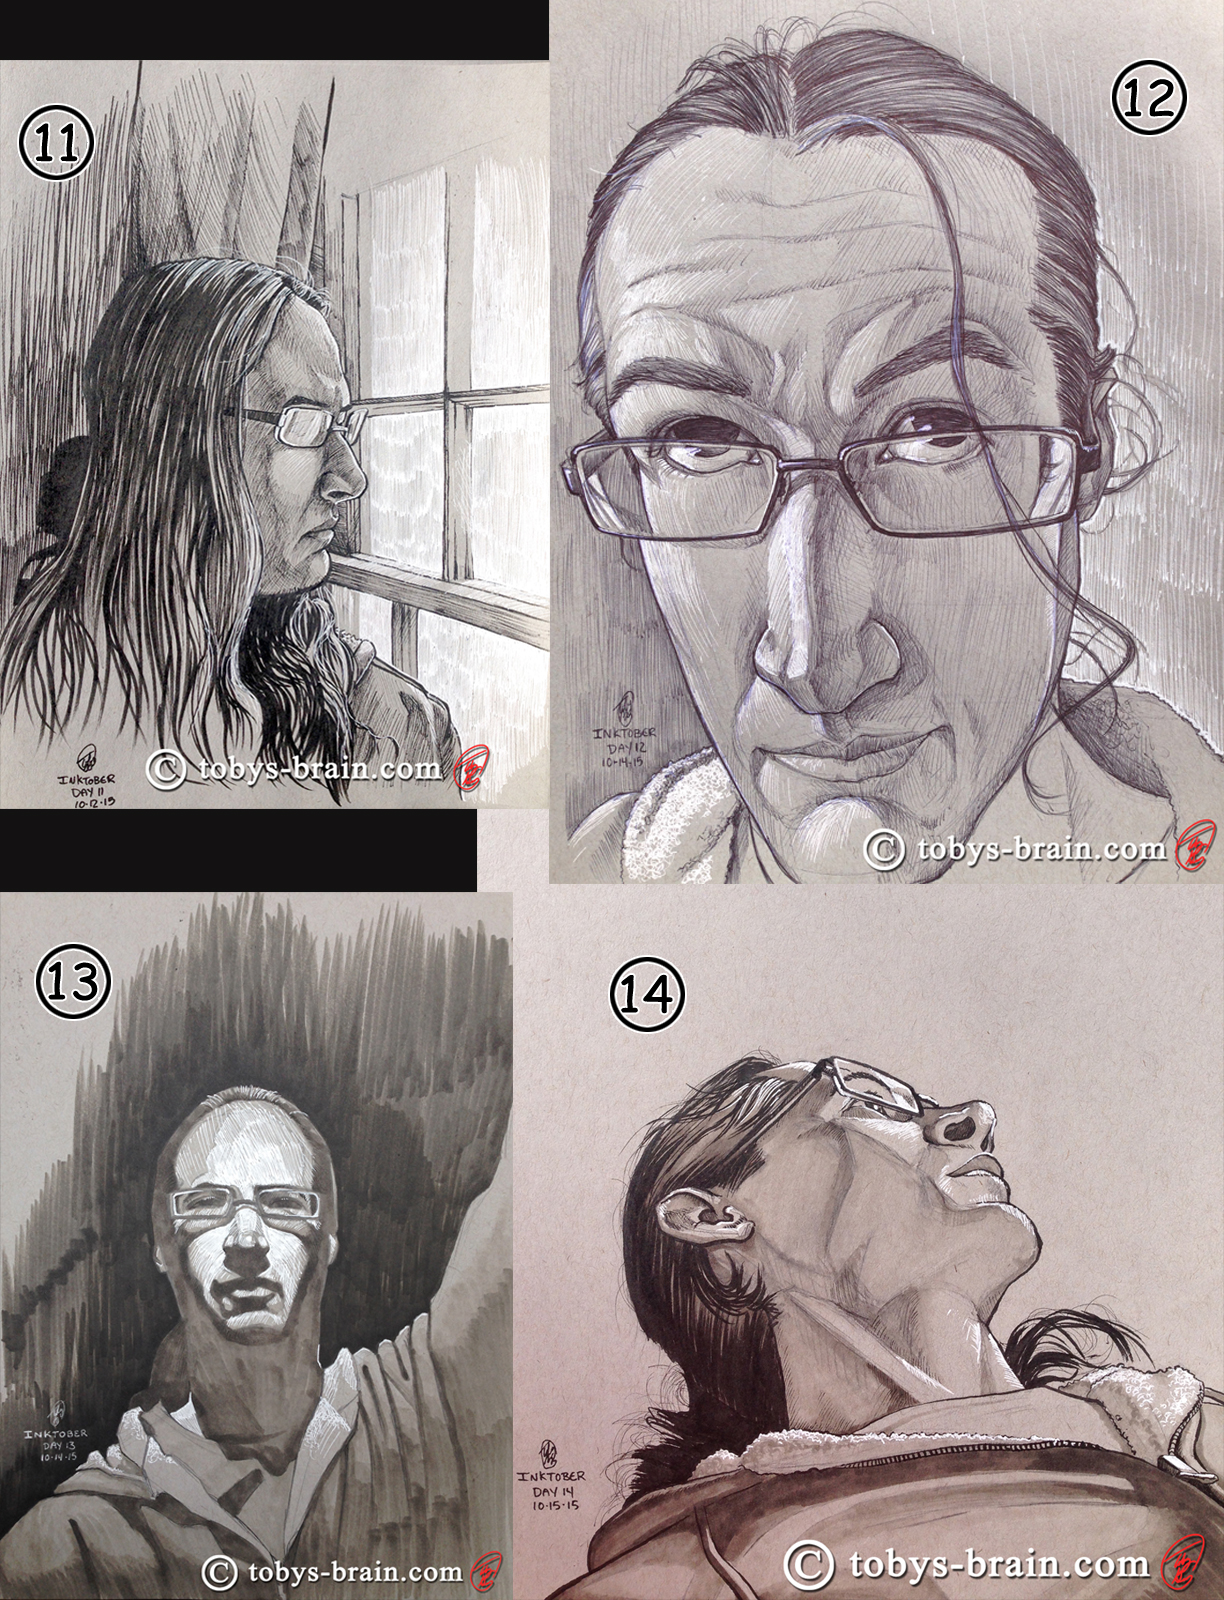 ink self-portrait series for October/Inktober 2015